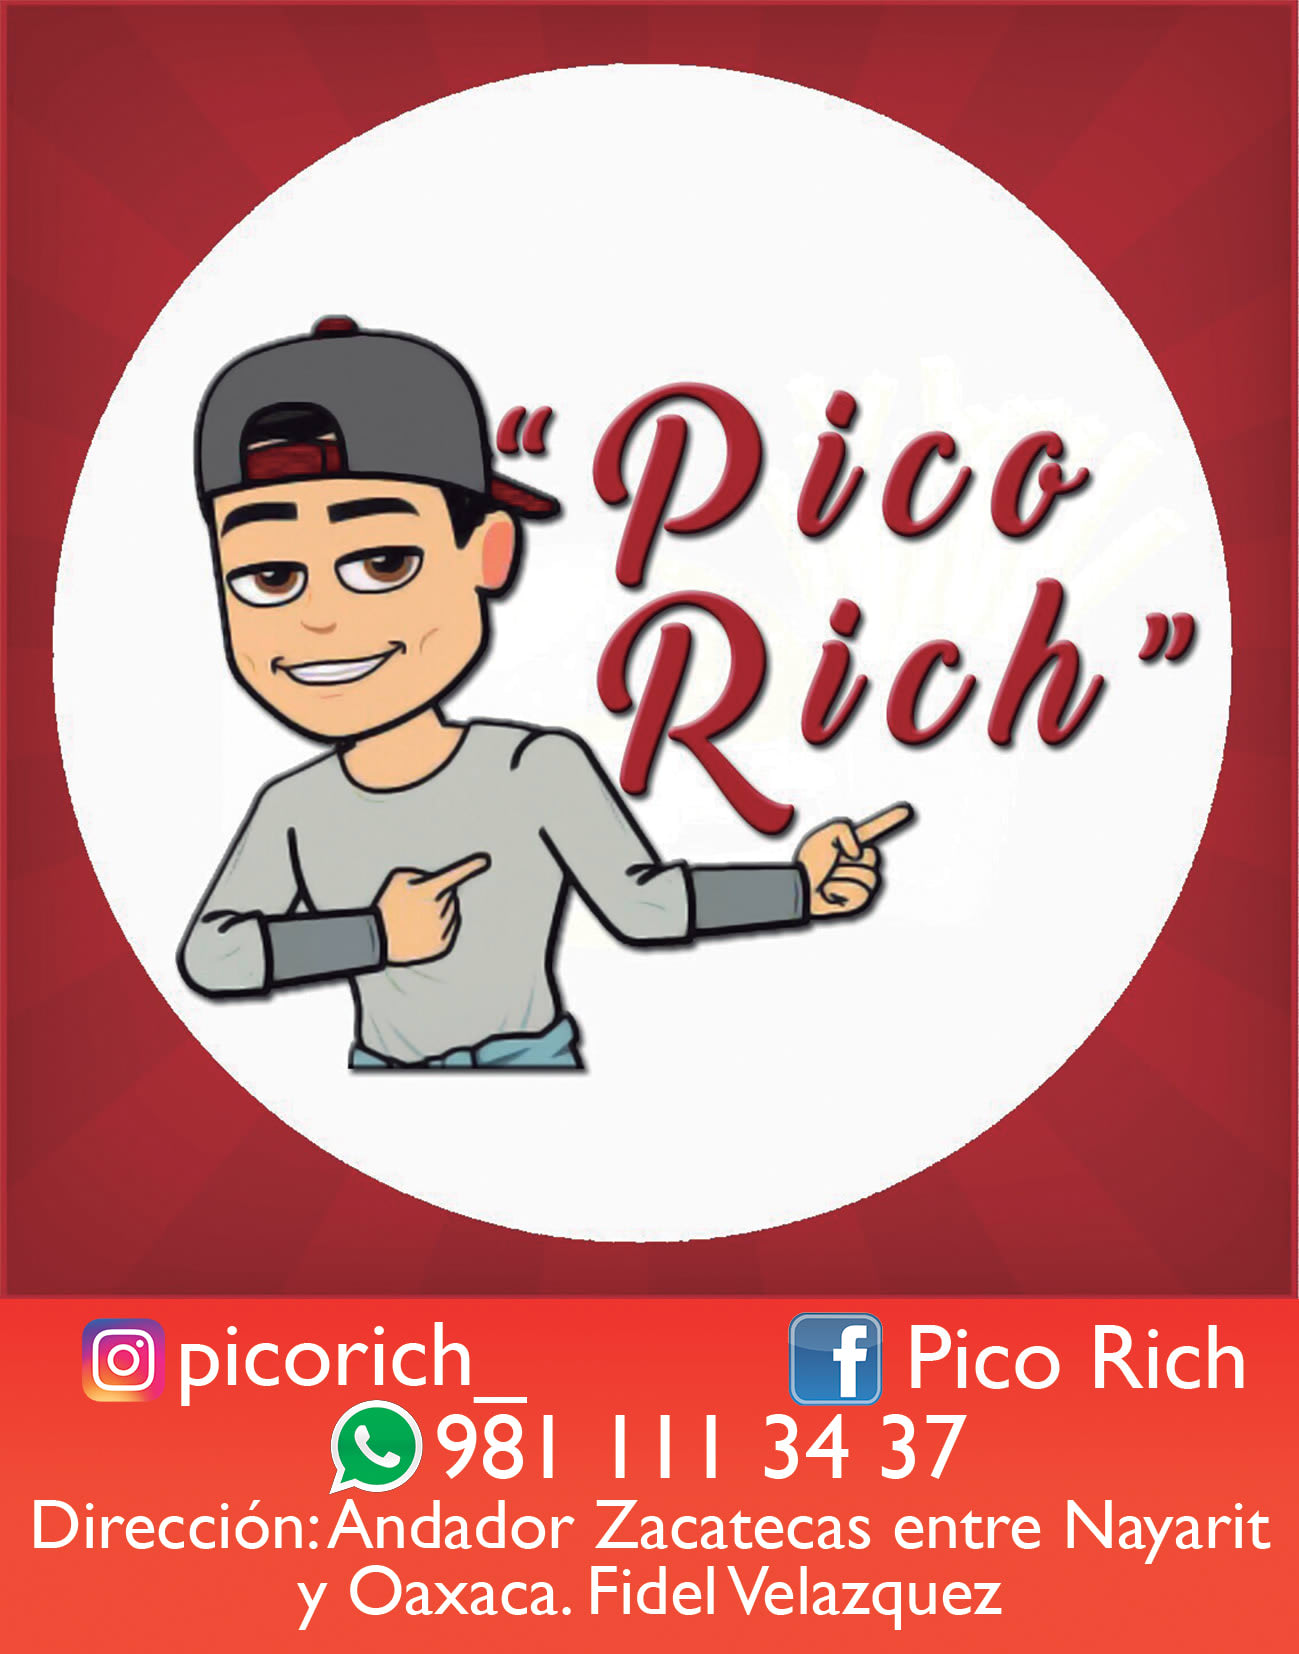 Picorich